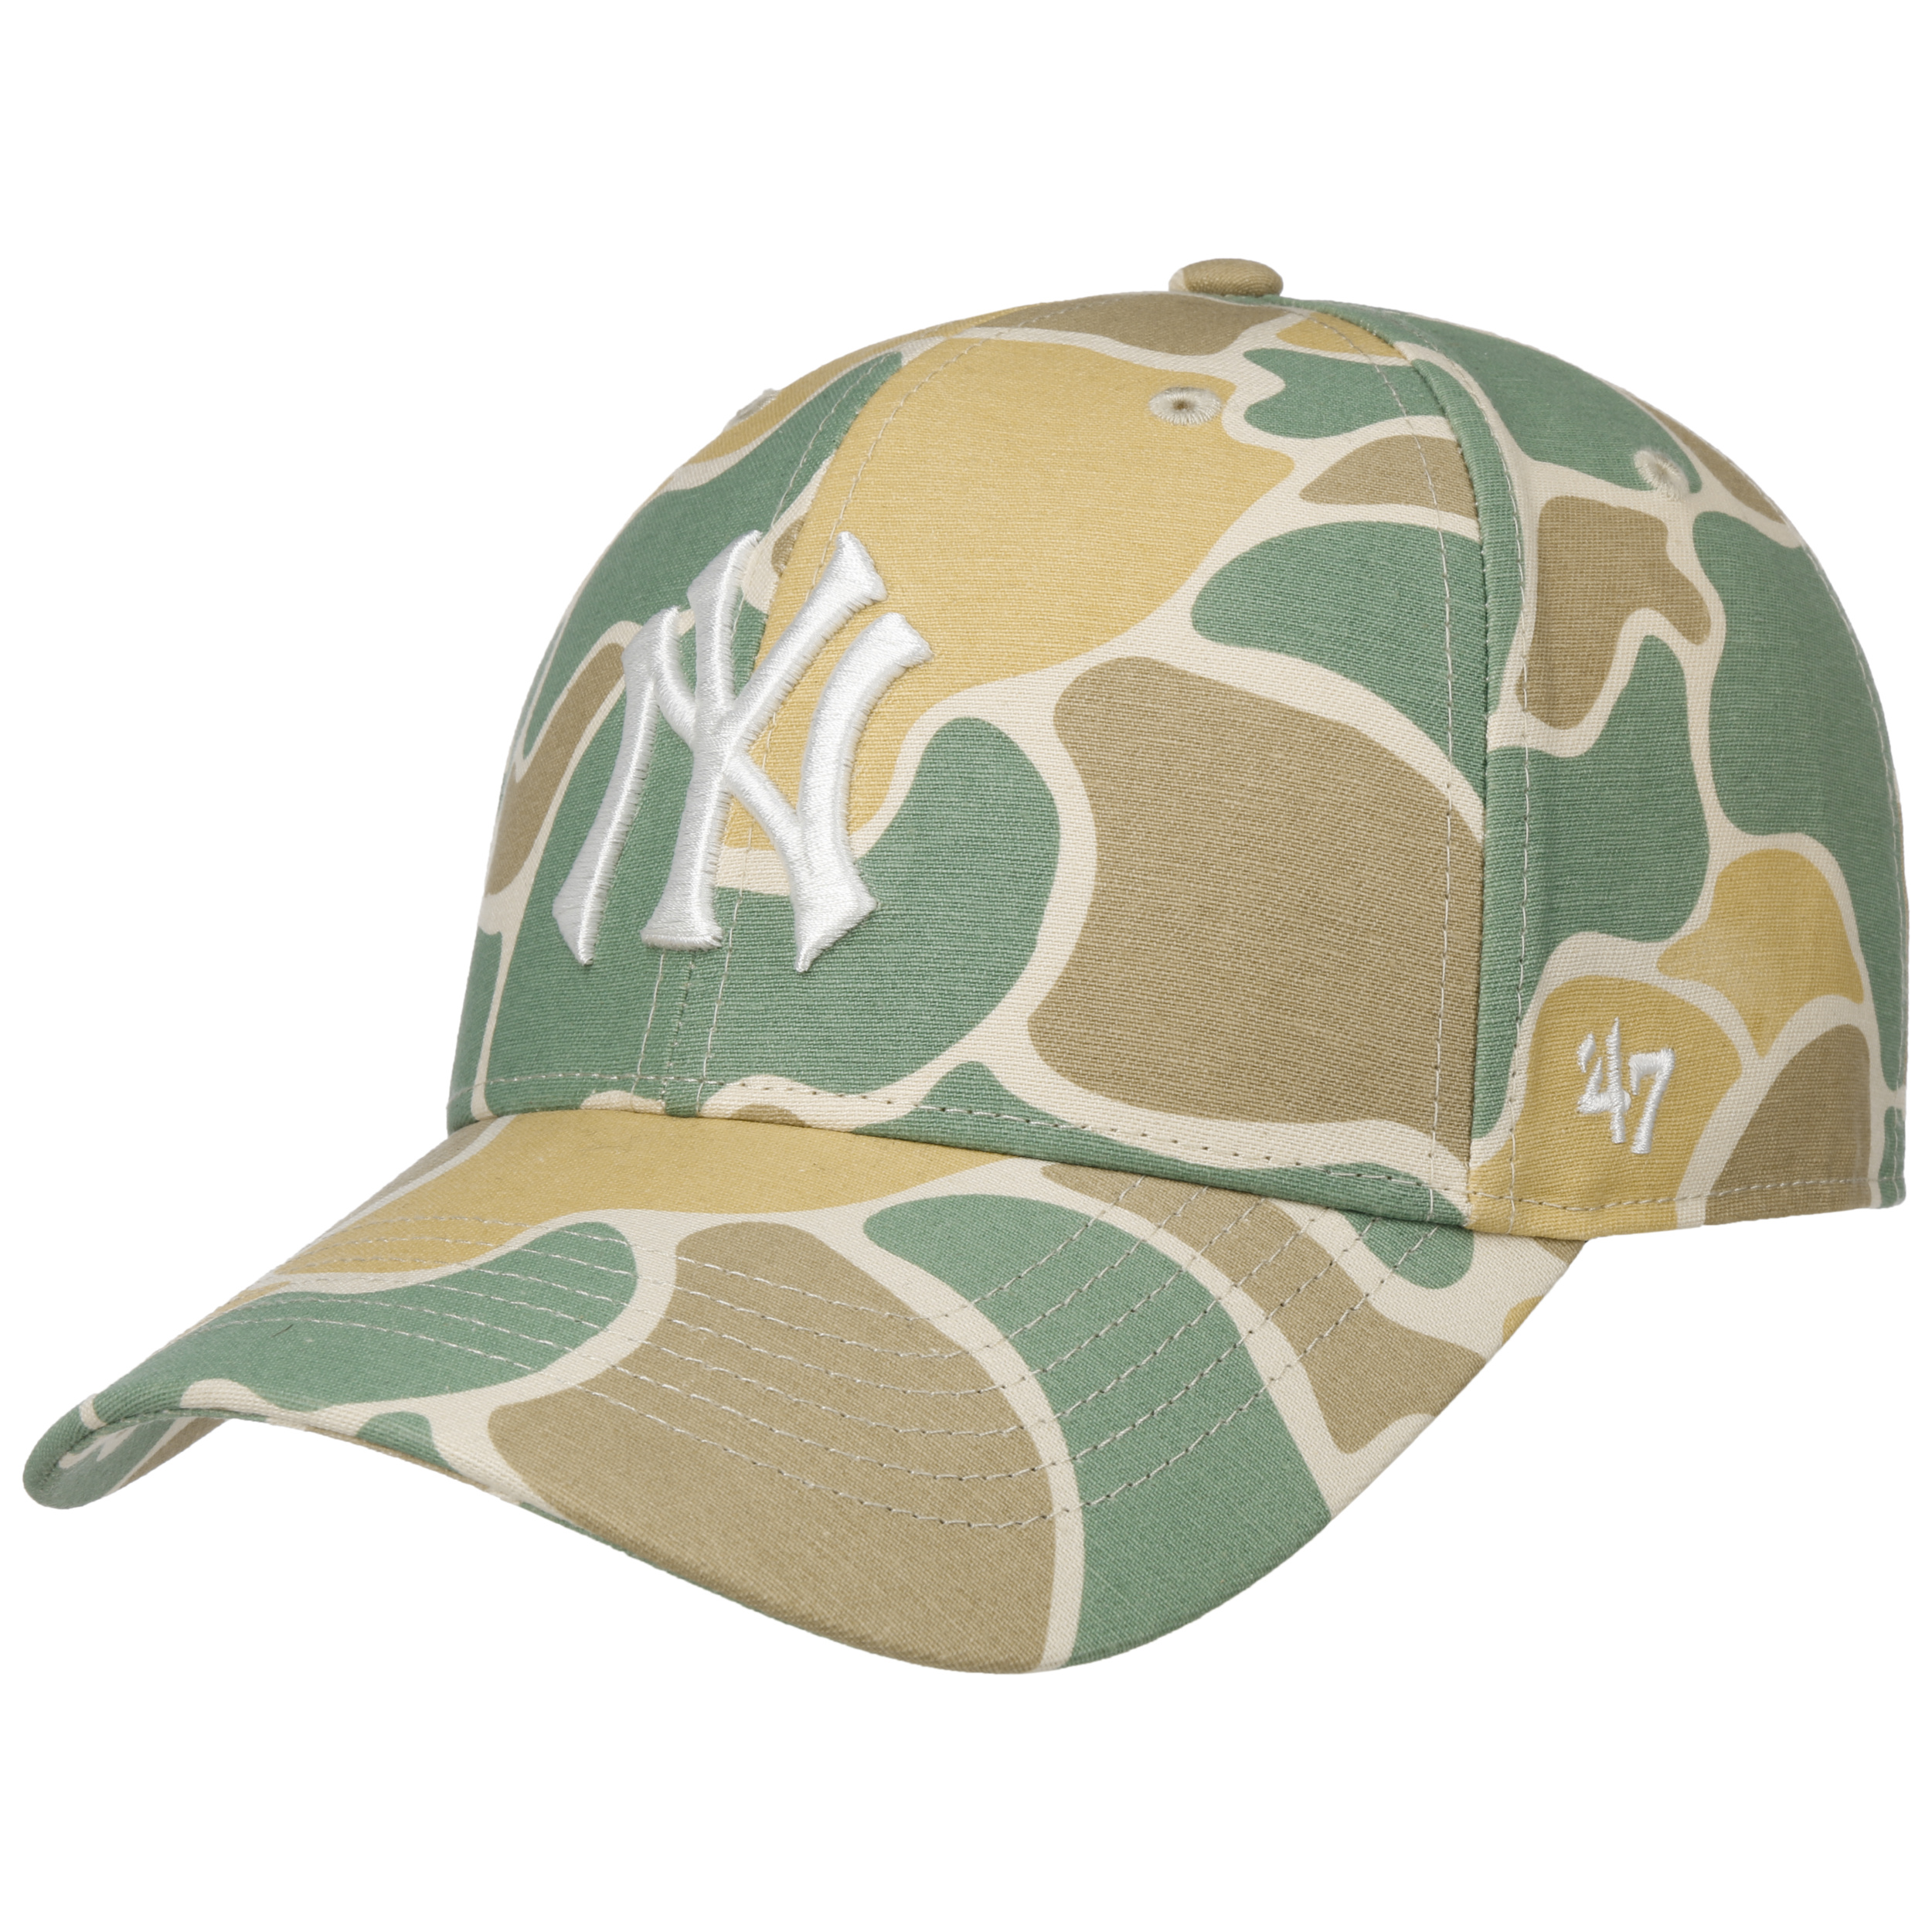 https://img.hatshopping.com/MLB-Yankees-Duck-Camo-Cap-by-47-Brand-camouflage.63008_rf61.jpg